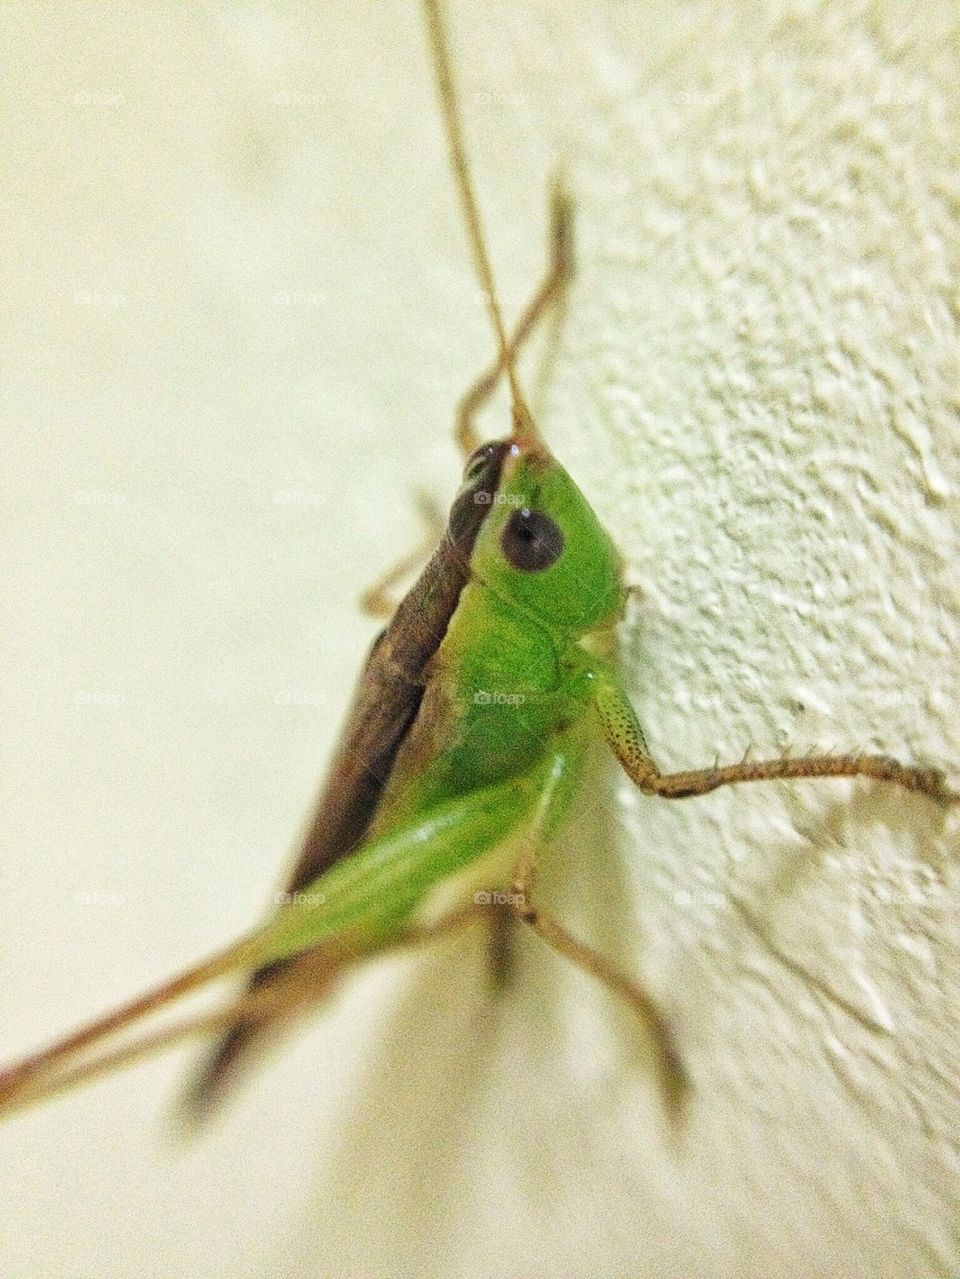 A grassshopper